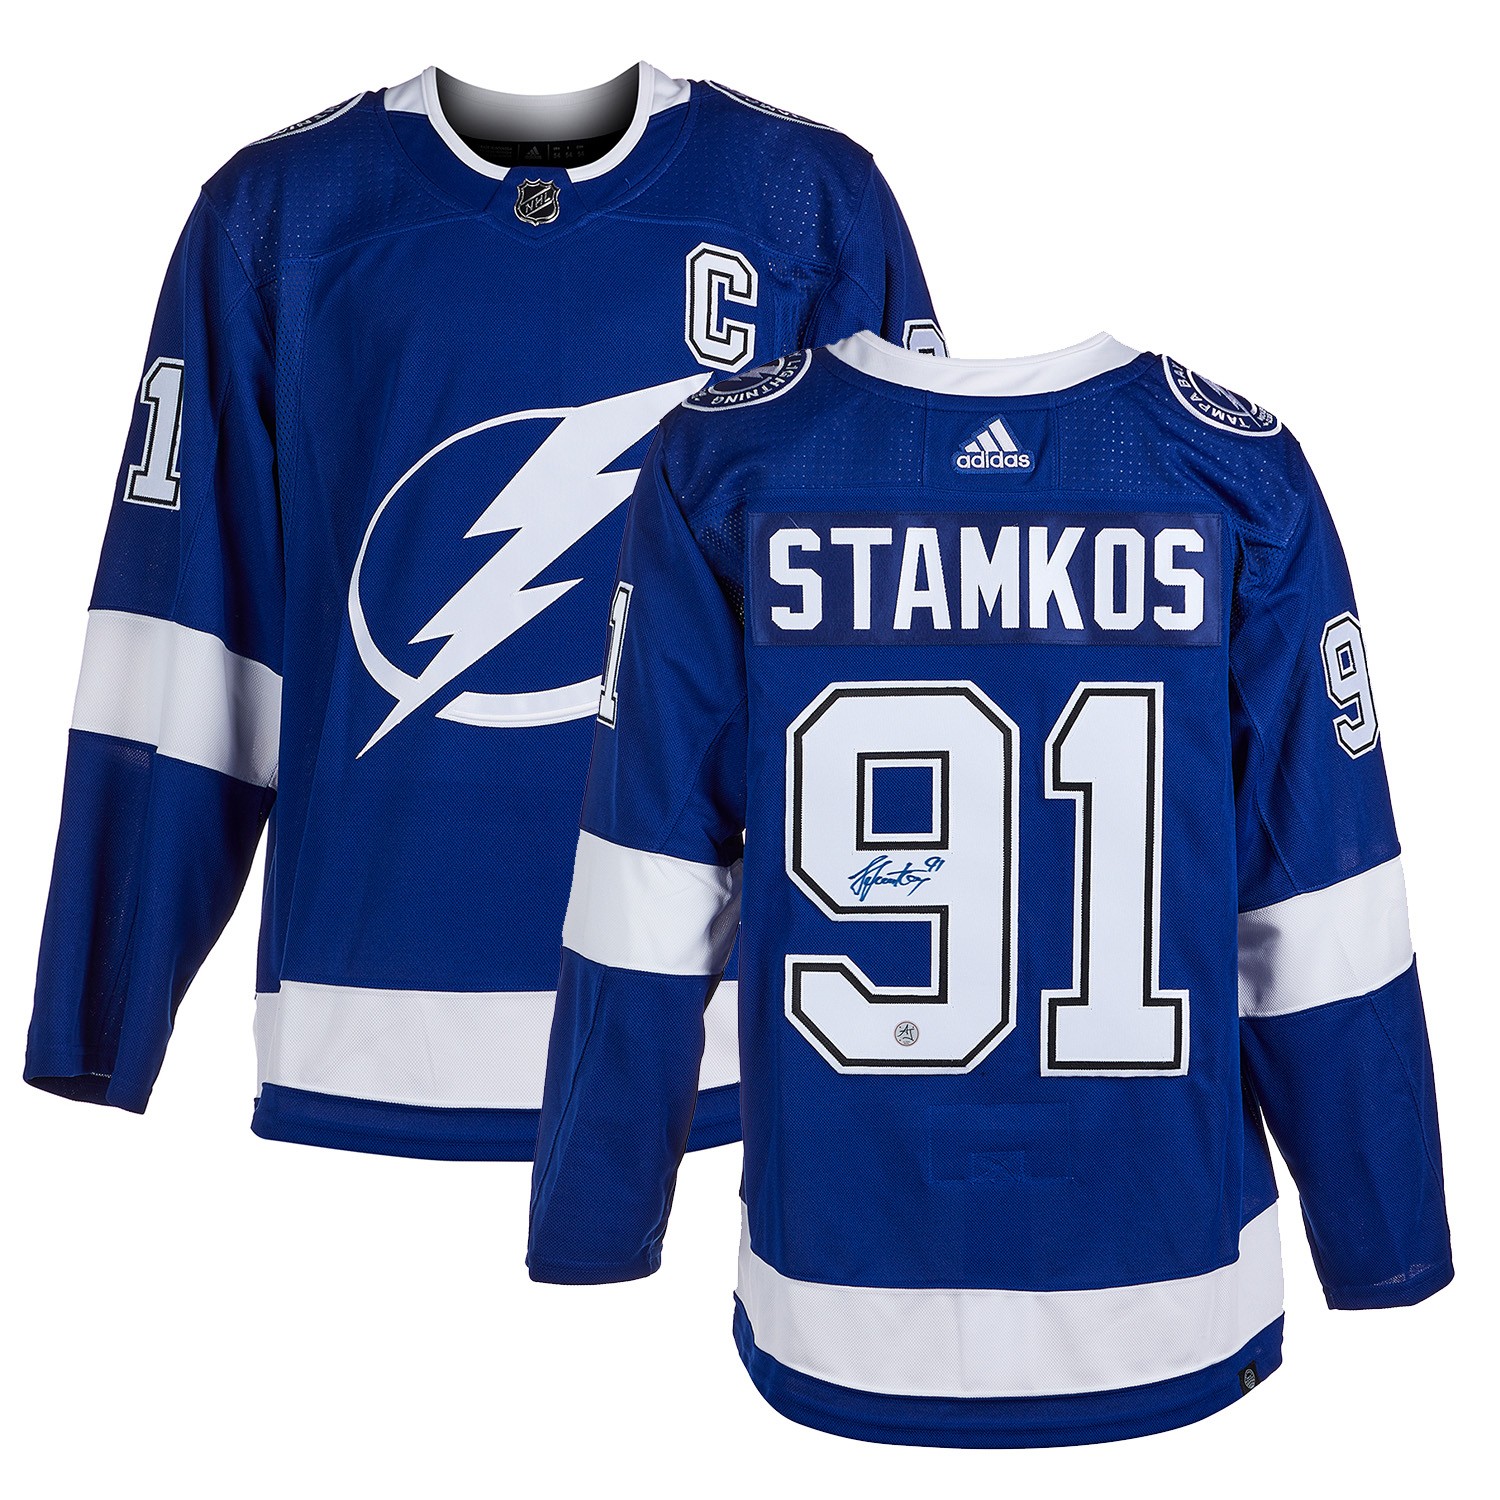 Steven Stamkos Autographed Tampa Bay Lightning Uniform Graphic